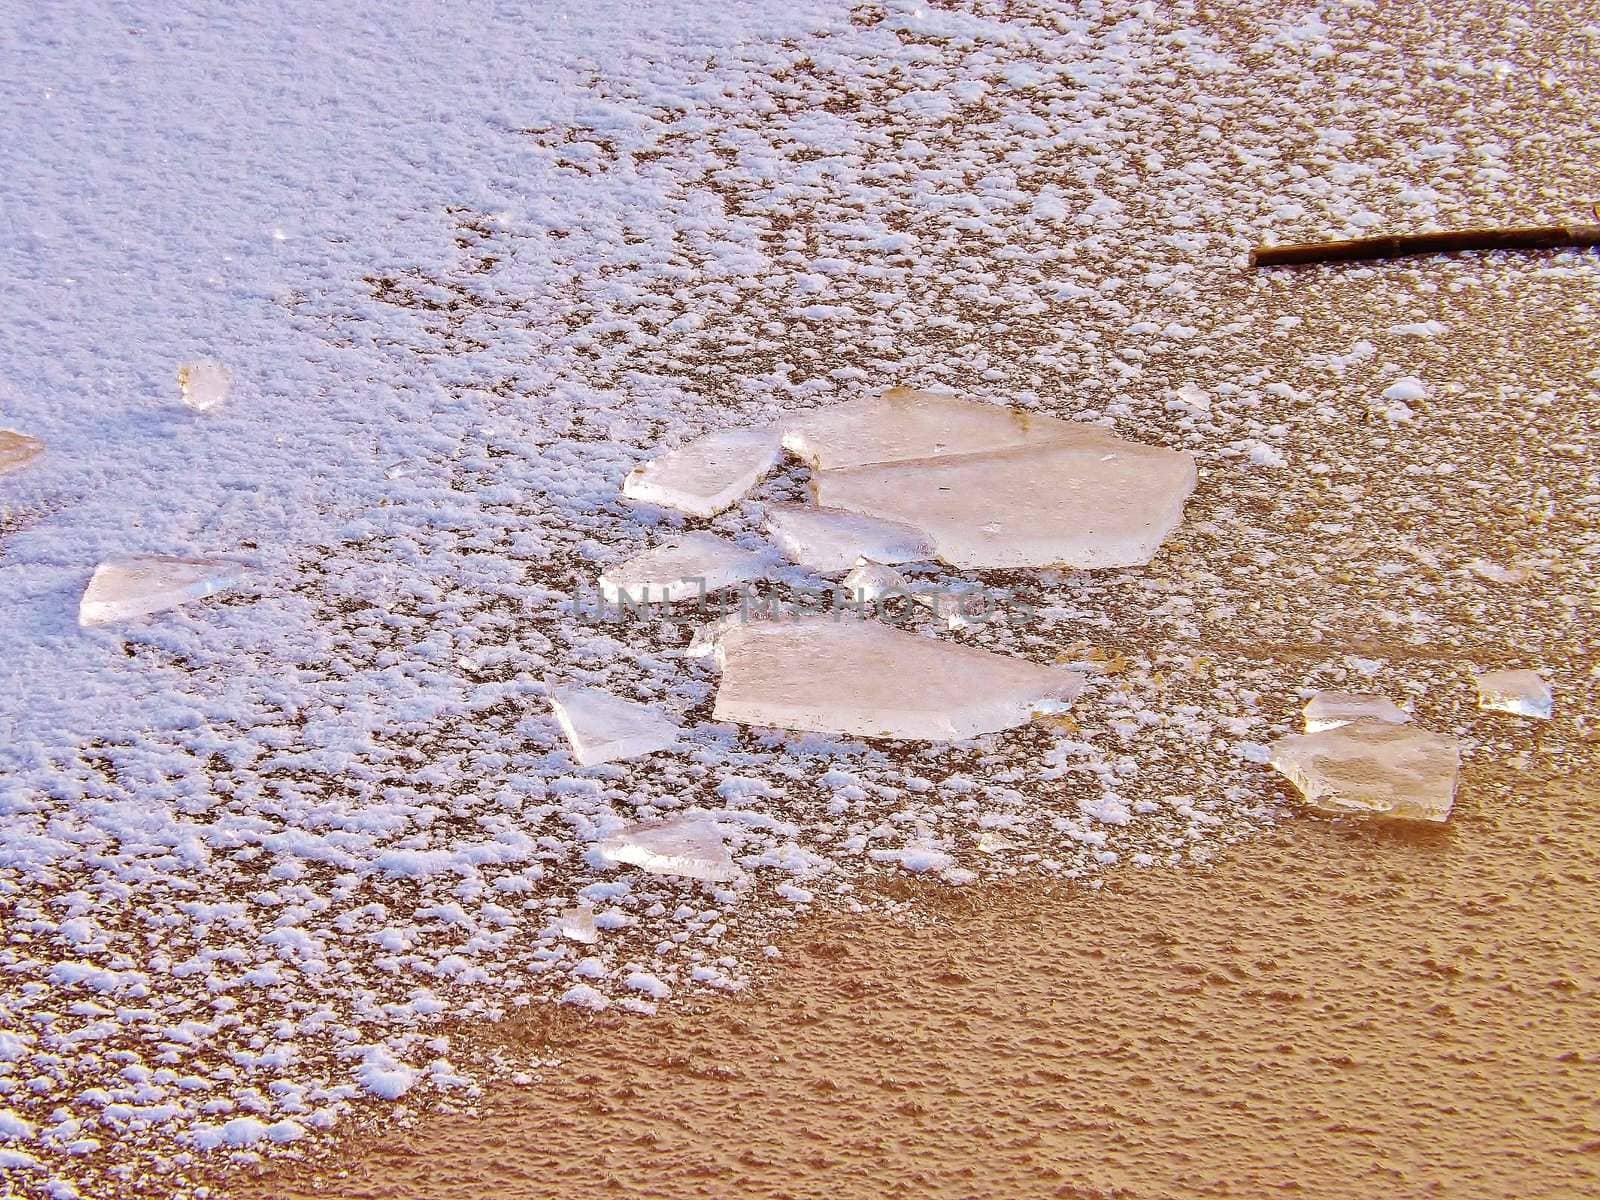 ice and sand by sunnyrider